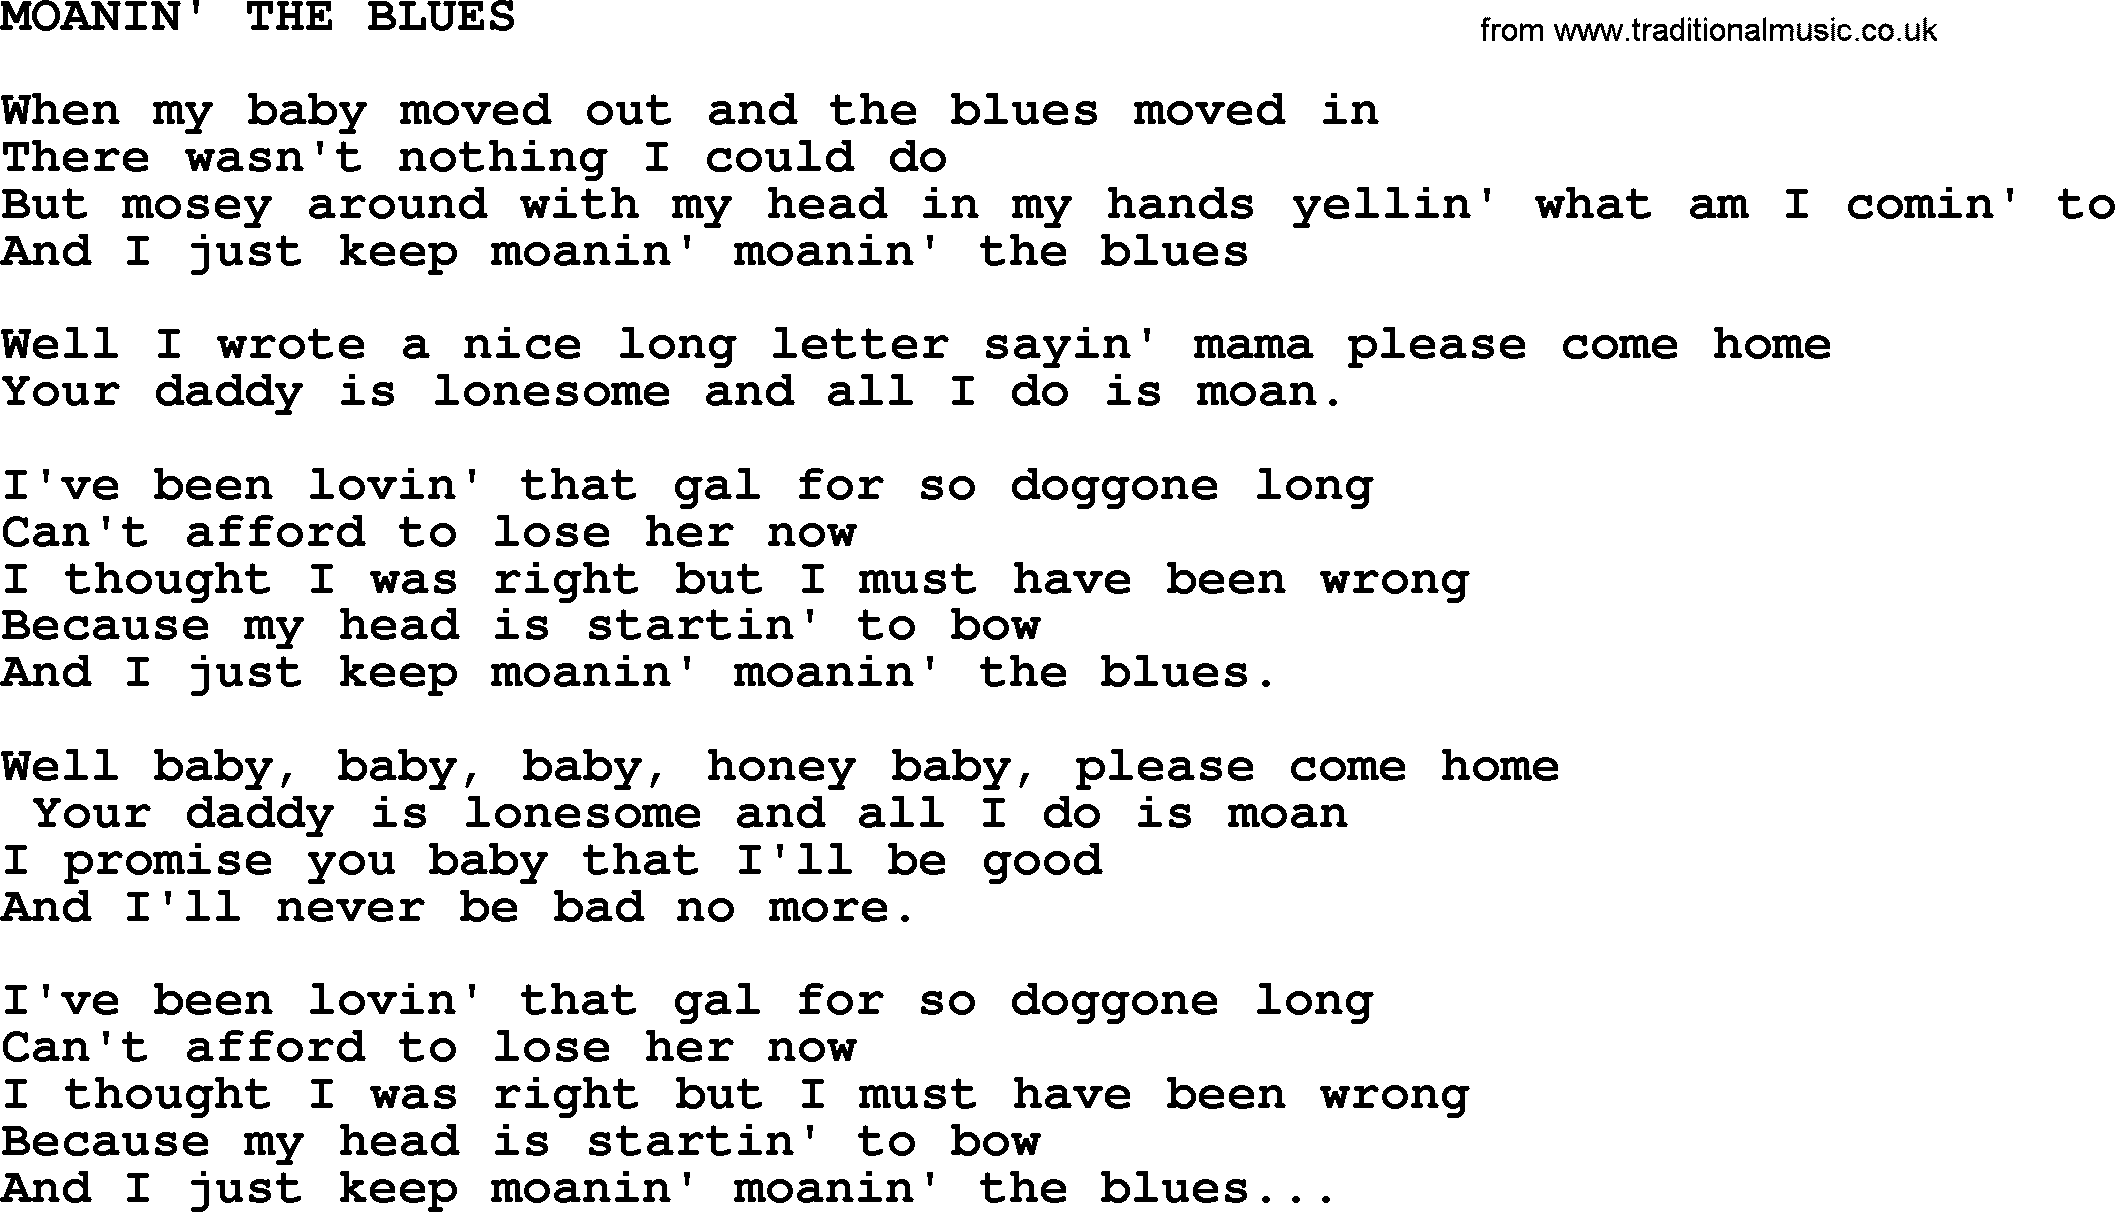 Merle Haggard song: Moanin' The Blues, lyrics.